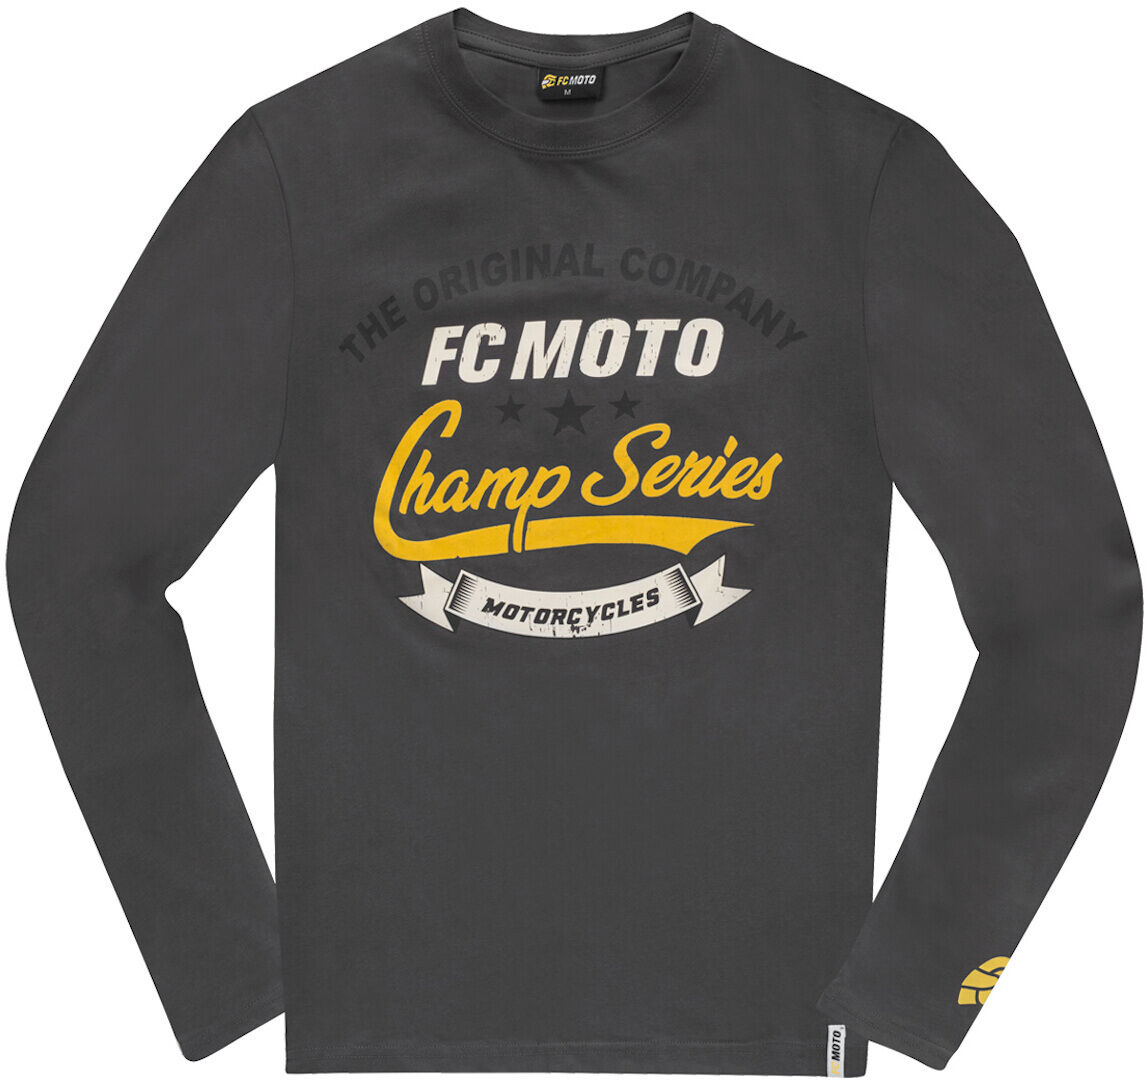 FC-Moto Champ Series Camisa Longsleeve - Negro Gris (M)